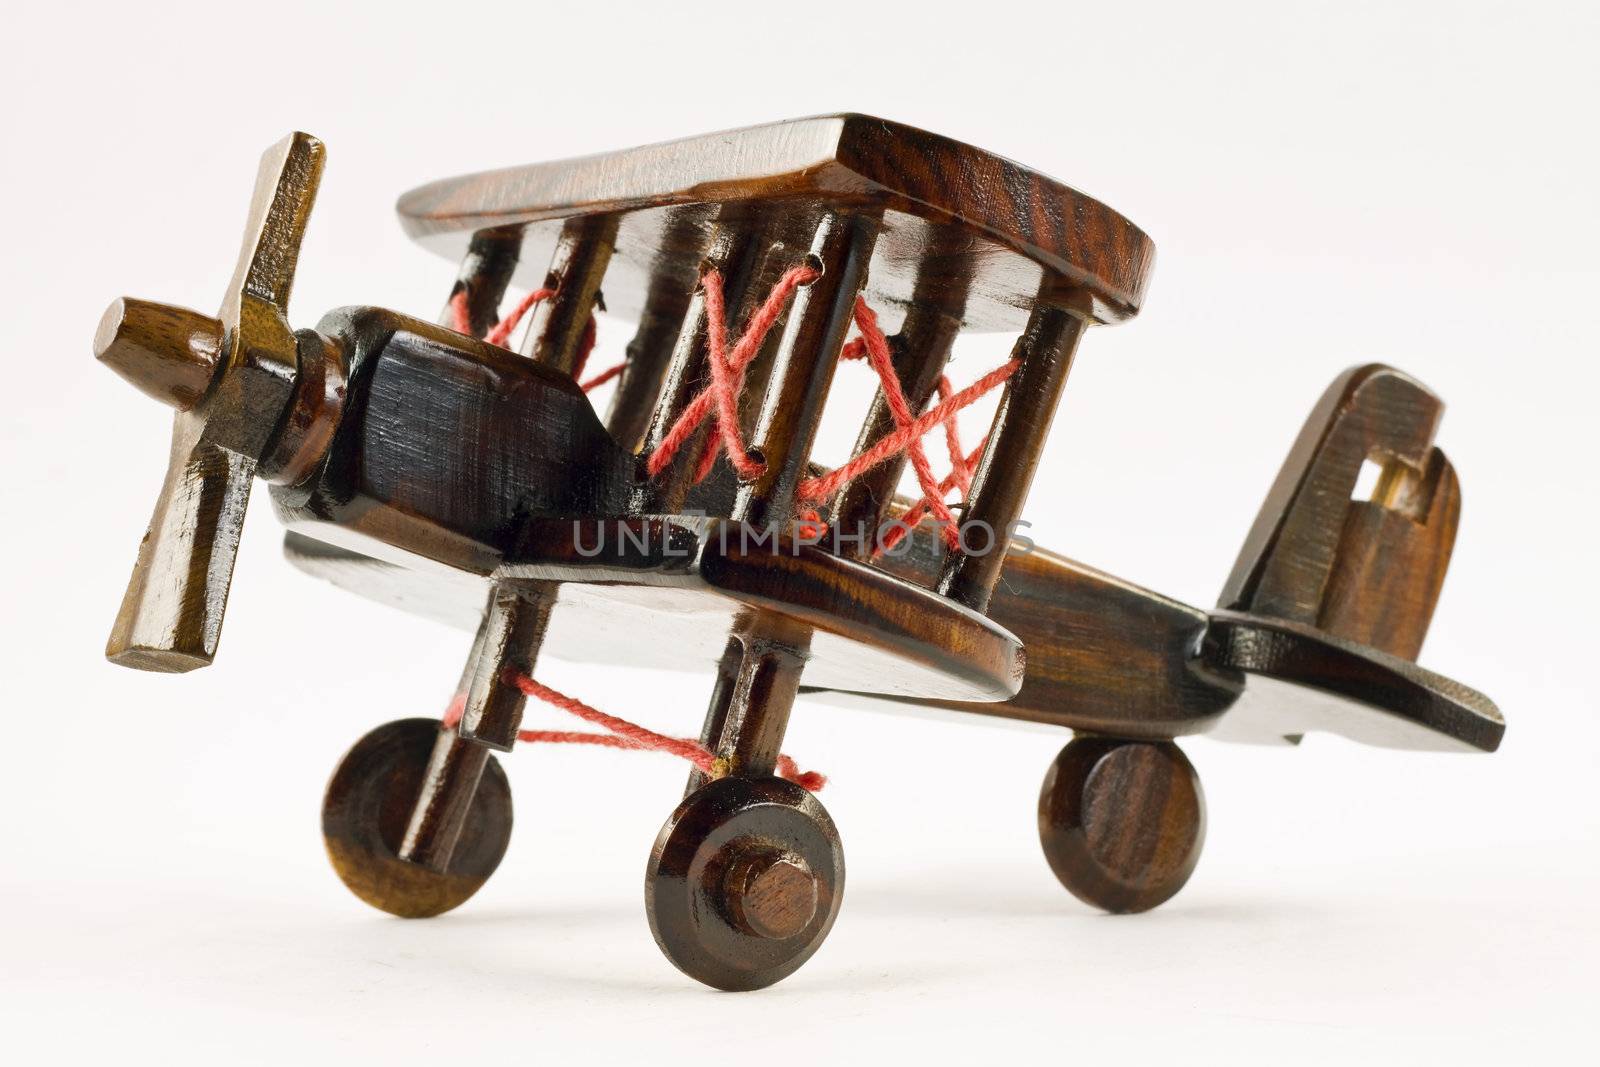 Retro wooden toy aeroplane by Jaykayl